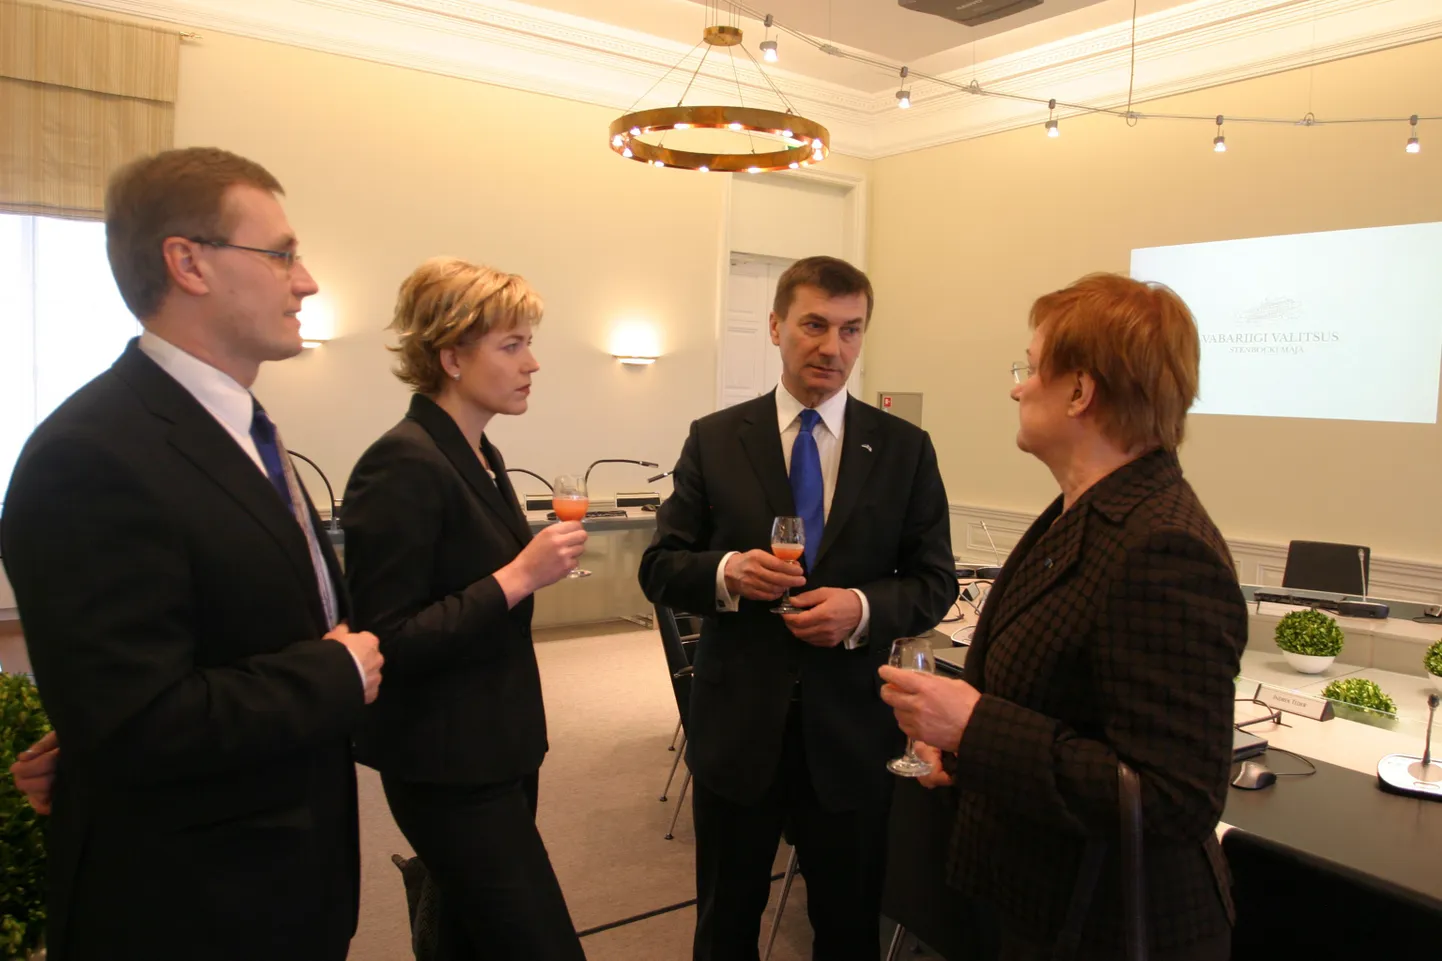 Soome president Tarja Halonen kohtus visiidil Eestis peaminister Andrus Ansipiga.